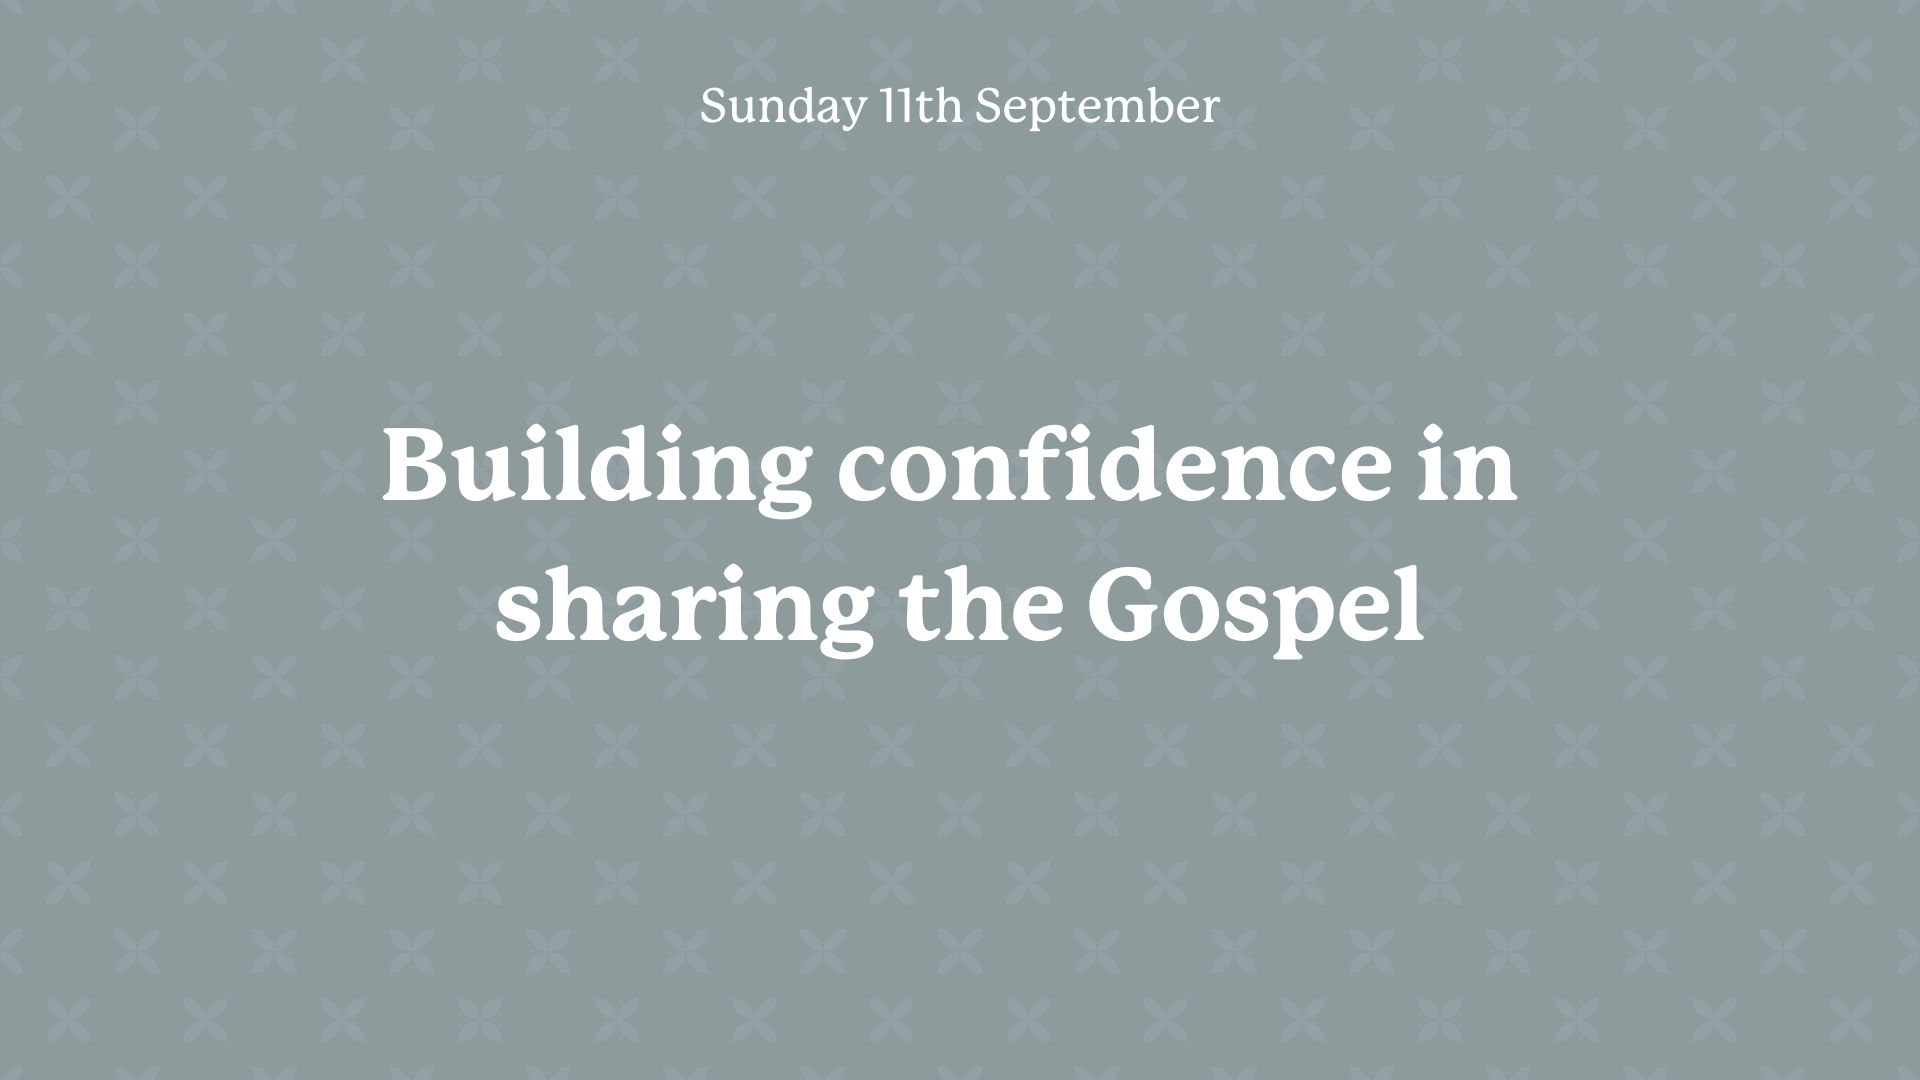 Sunday Service - Confidence